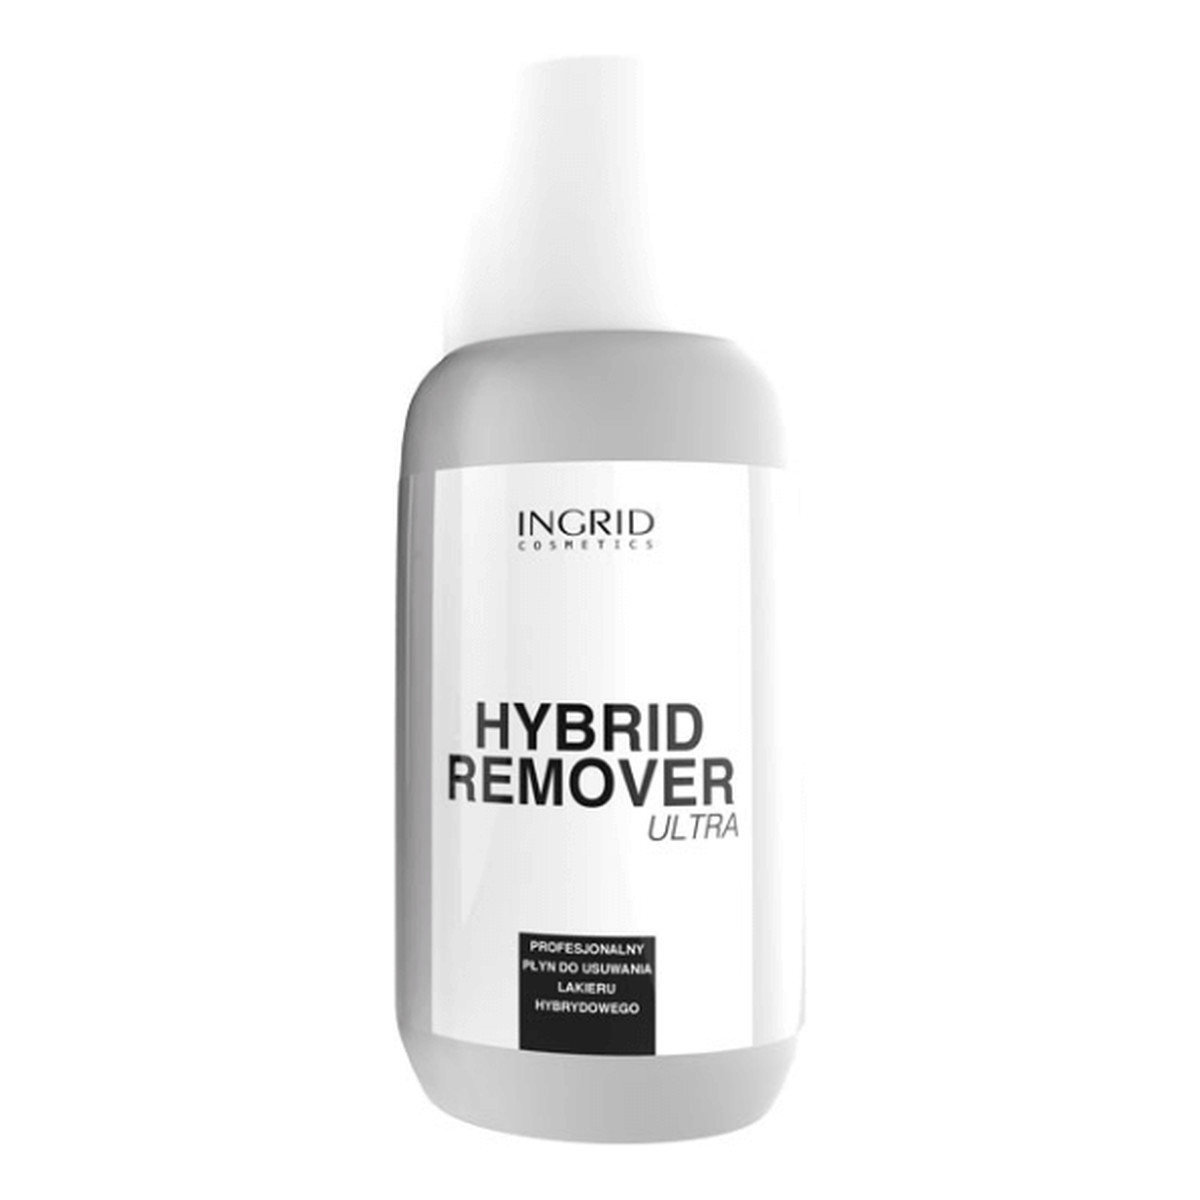 Ingrid Hybrid Remover Ultra płyn do usuwania lakieru hybrydowego 150ml